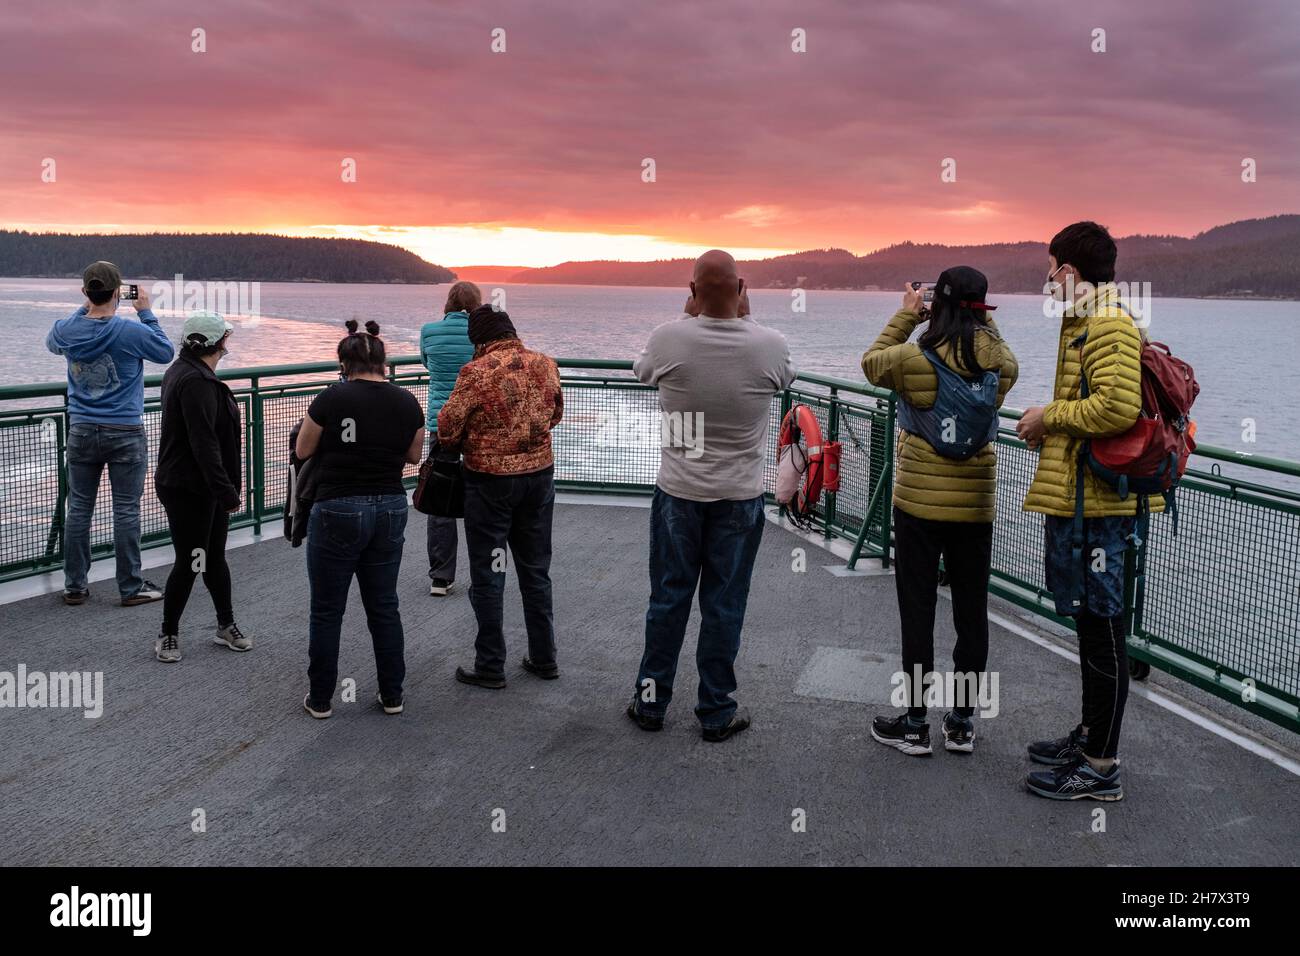 WA20434-00....WASHINGTON - Passangers watching  the sunset on a Washington State Ferry bound for Anacortes, San Juan Islands group. Stock Photo